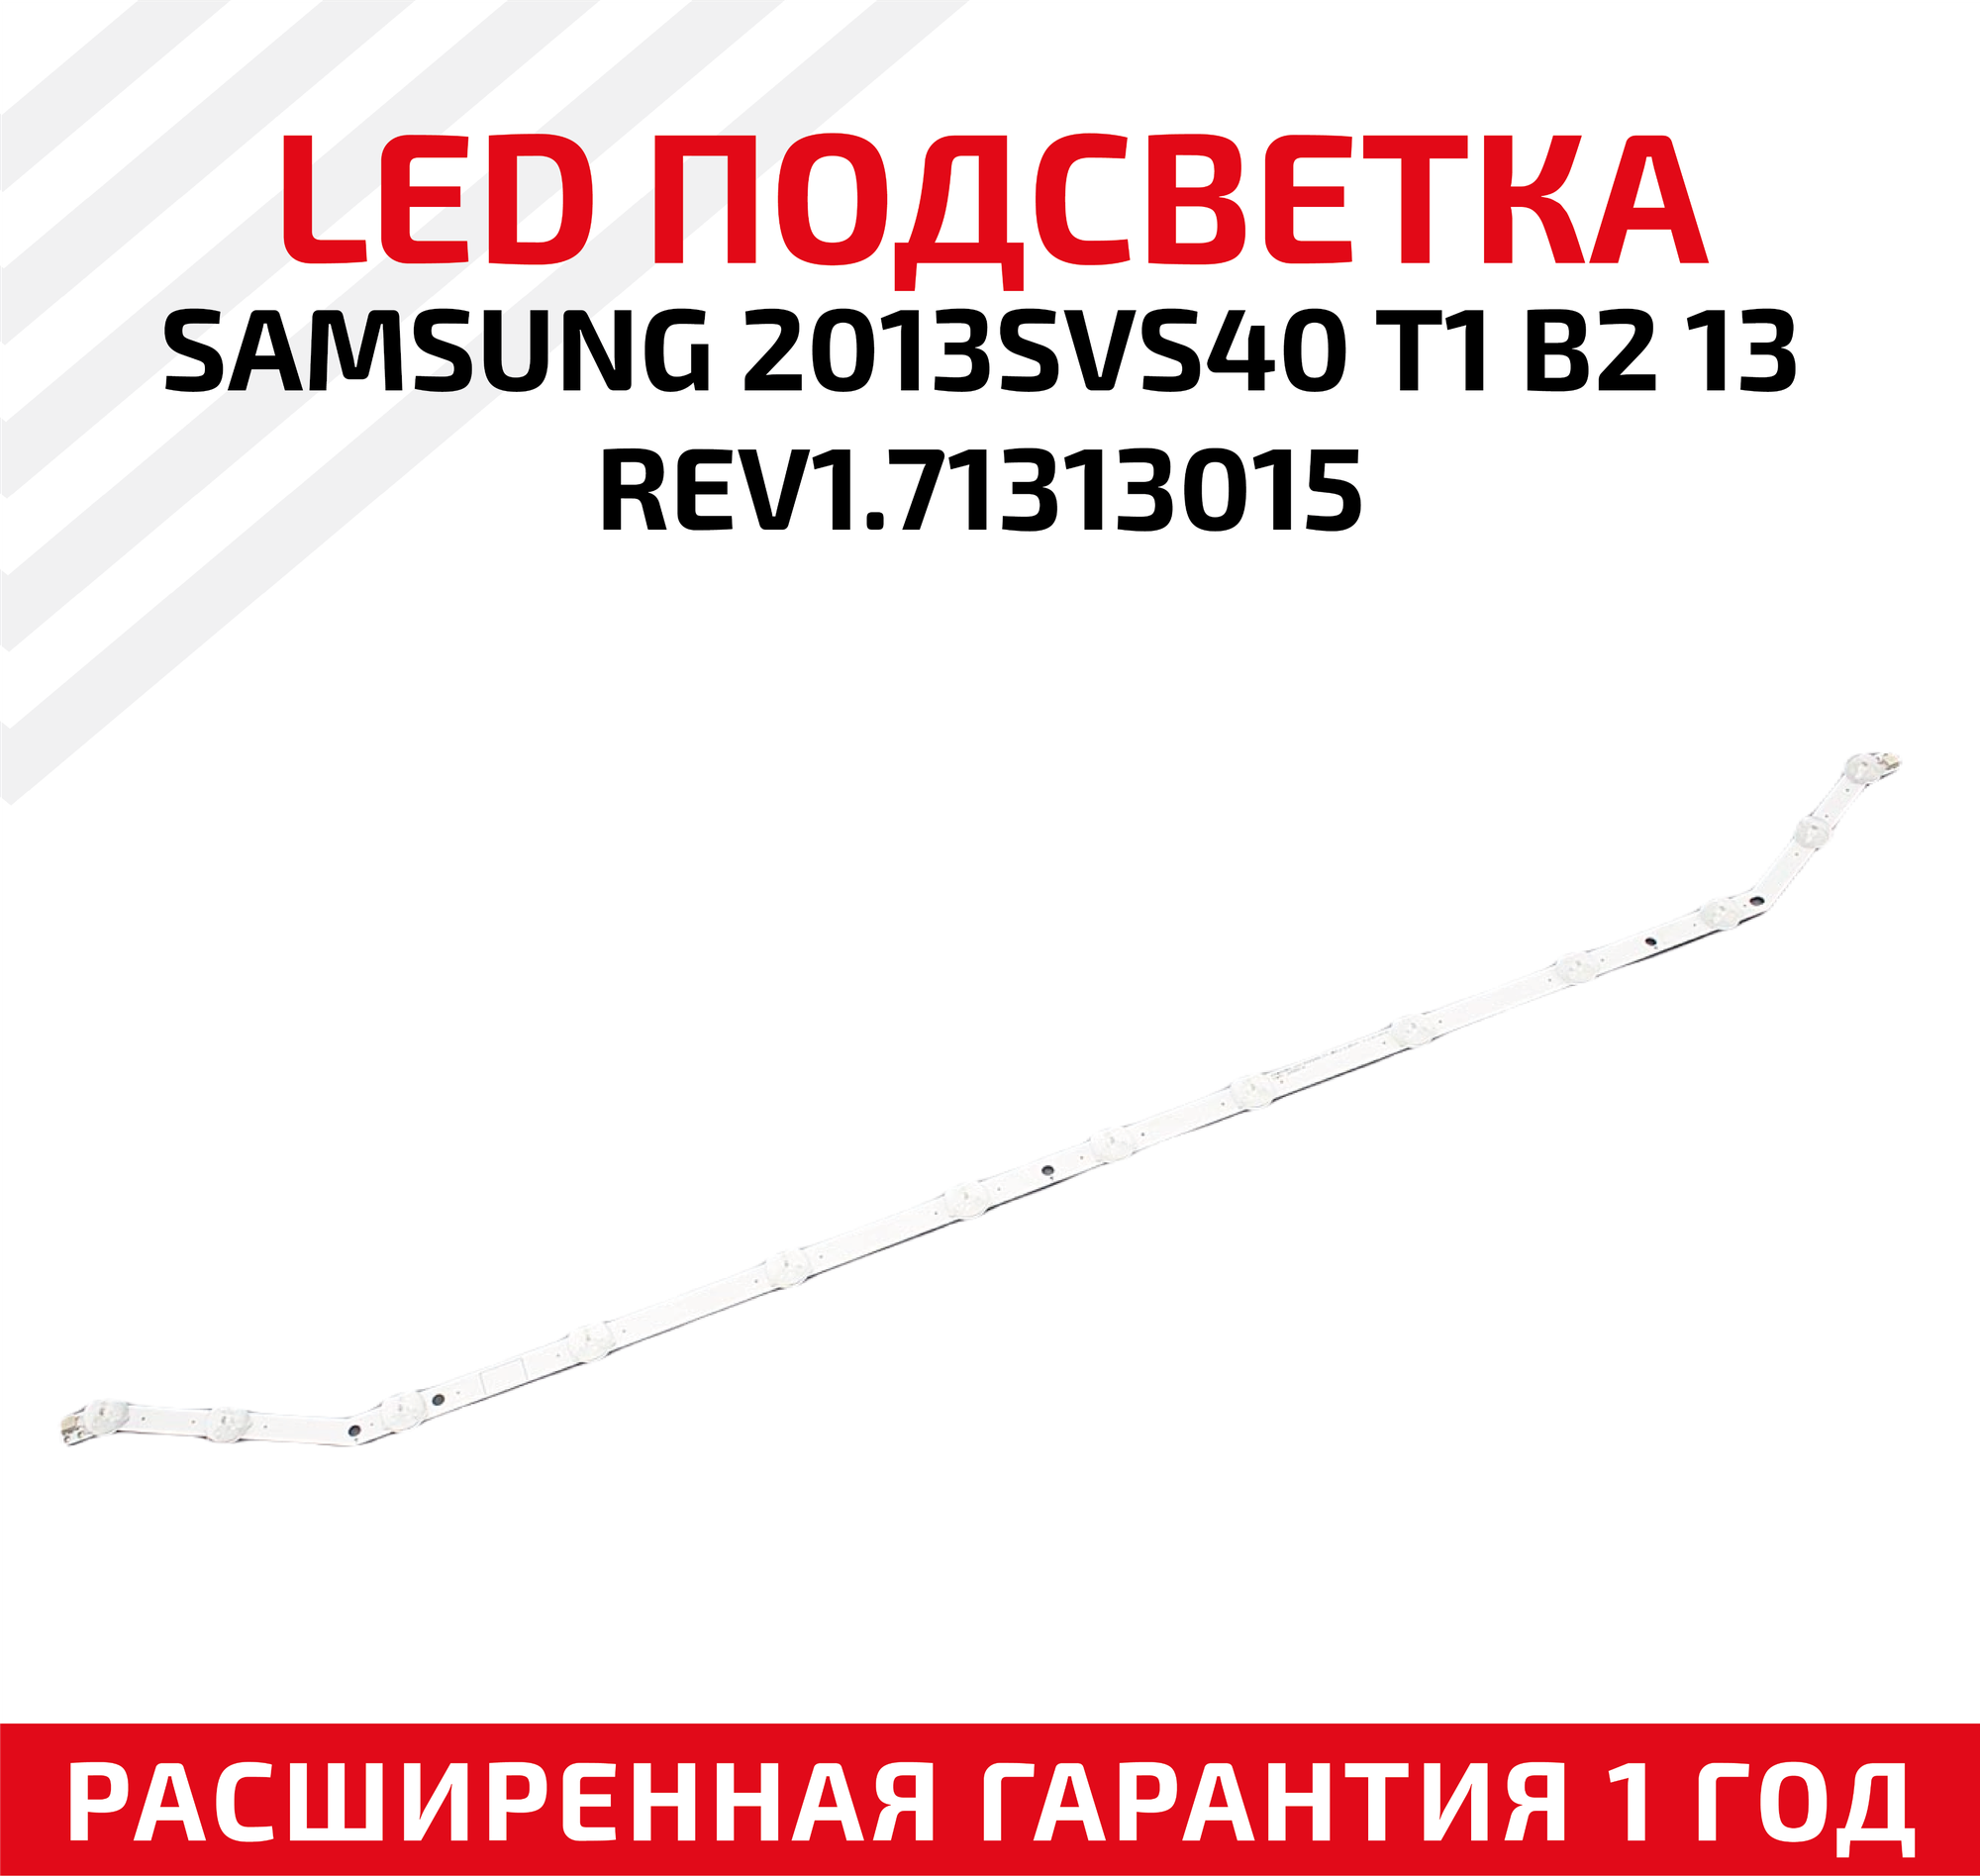 LED подсветка (светодиодная планка) для телевизора Samsung 2013SVS40 T1 B2 13 REV171313015